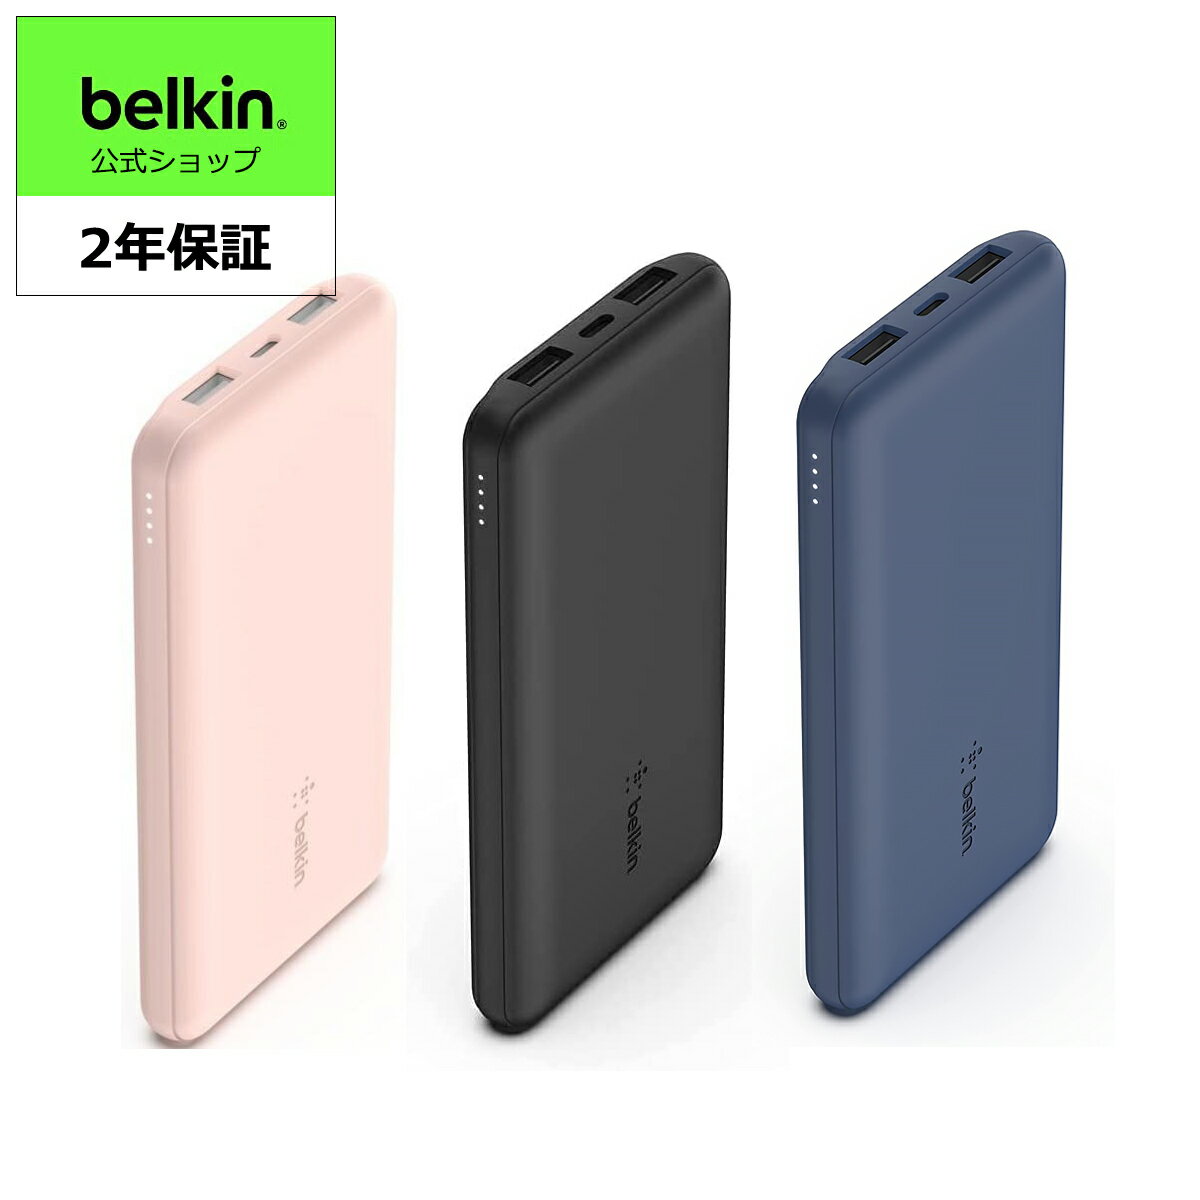 【VGP 2022受賞】Belkin モバイルバッテリー 大容量10000mAh iPhone&Android対応 最大15W 最大40時間 3台同時充電 3ポート(USB-C x 1 USB-A x 2) スリム&軽量 PSE技術基準適合 機内持ち込み可能 充電用ケーブル付属 メーカー保証2年 BPB011bt